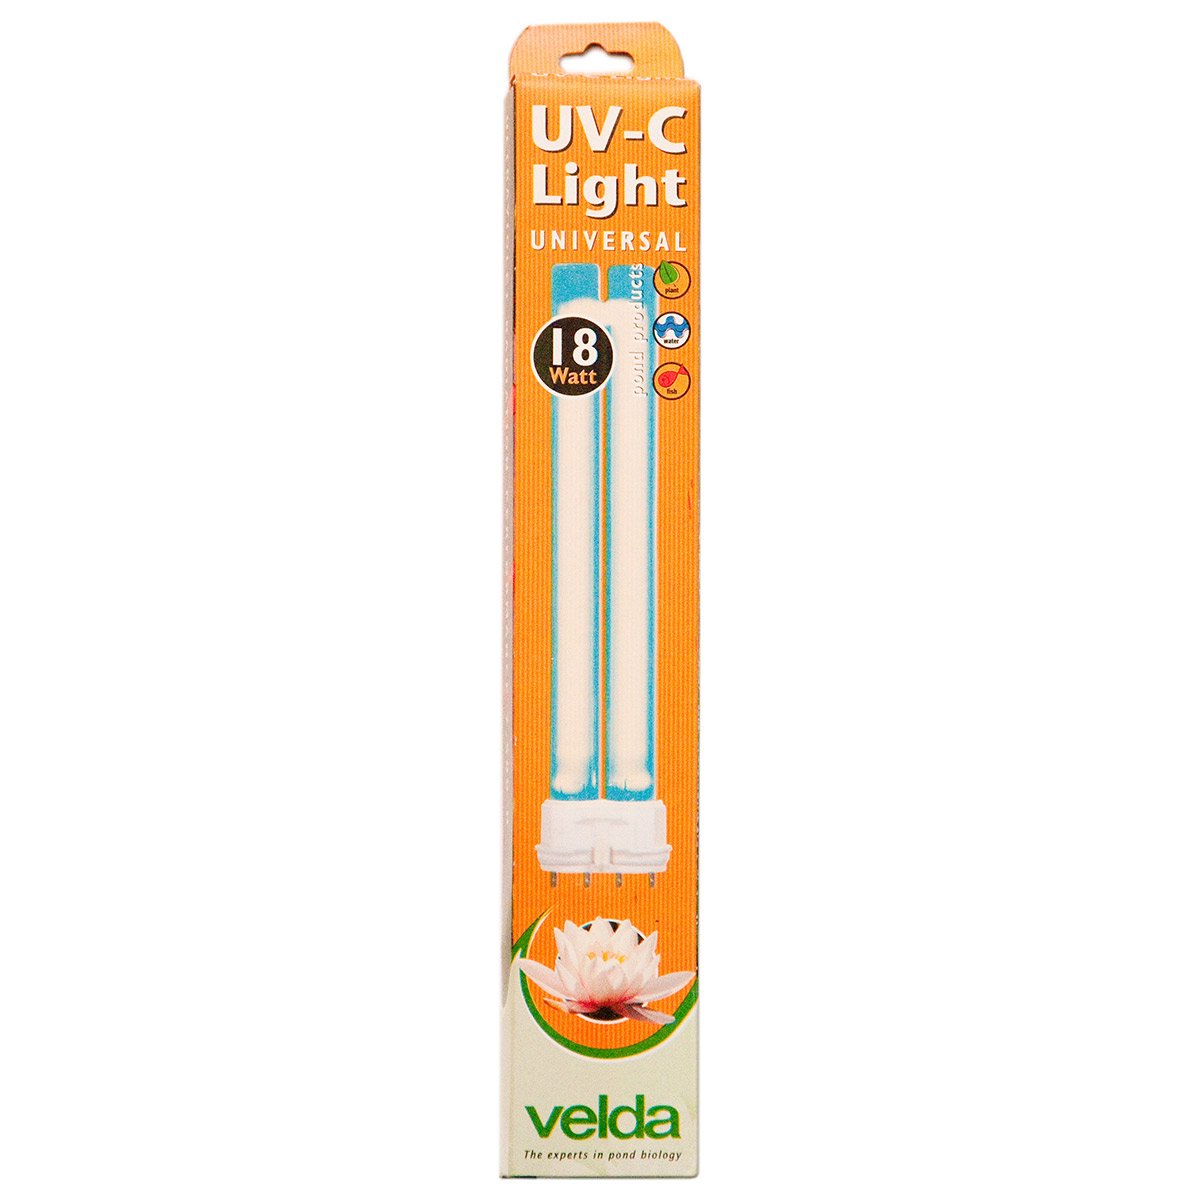 Velda UV-C PL Lampe 18 Watt von Velda